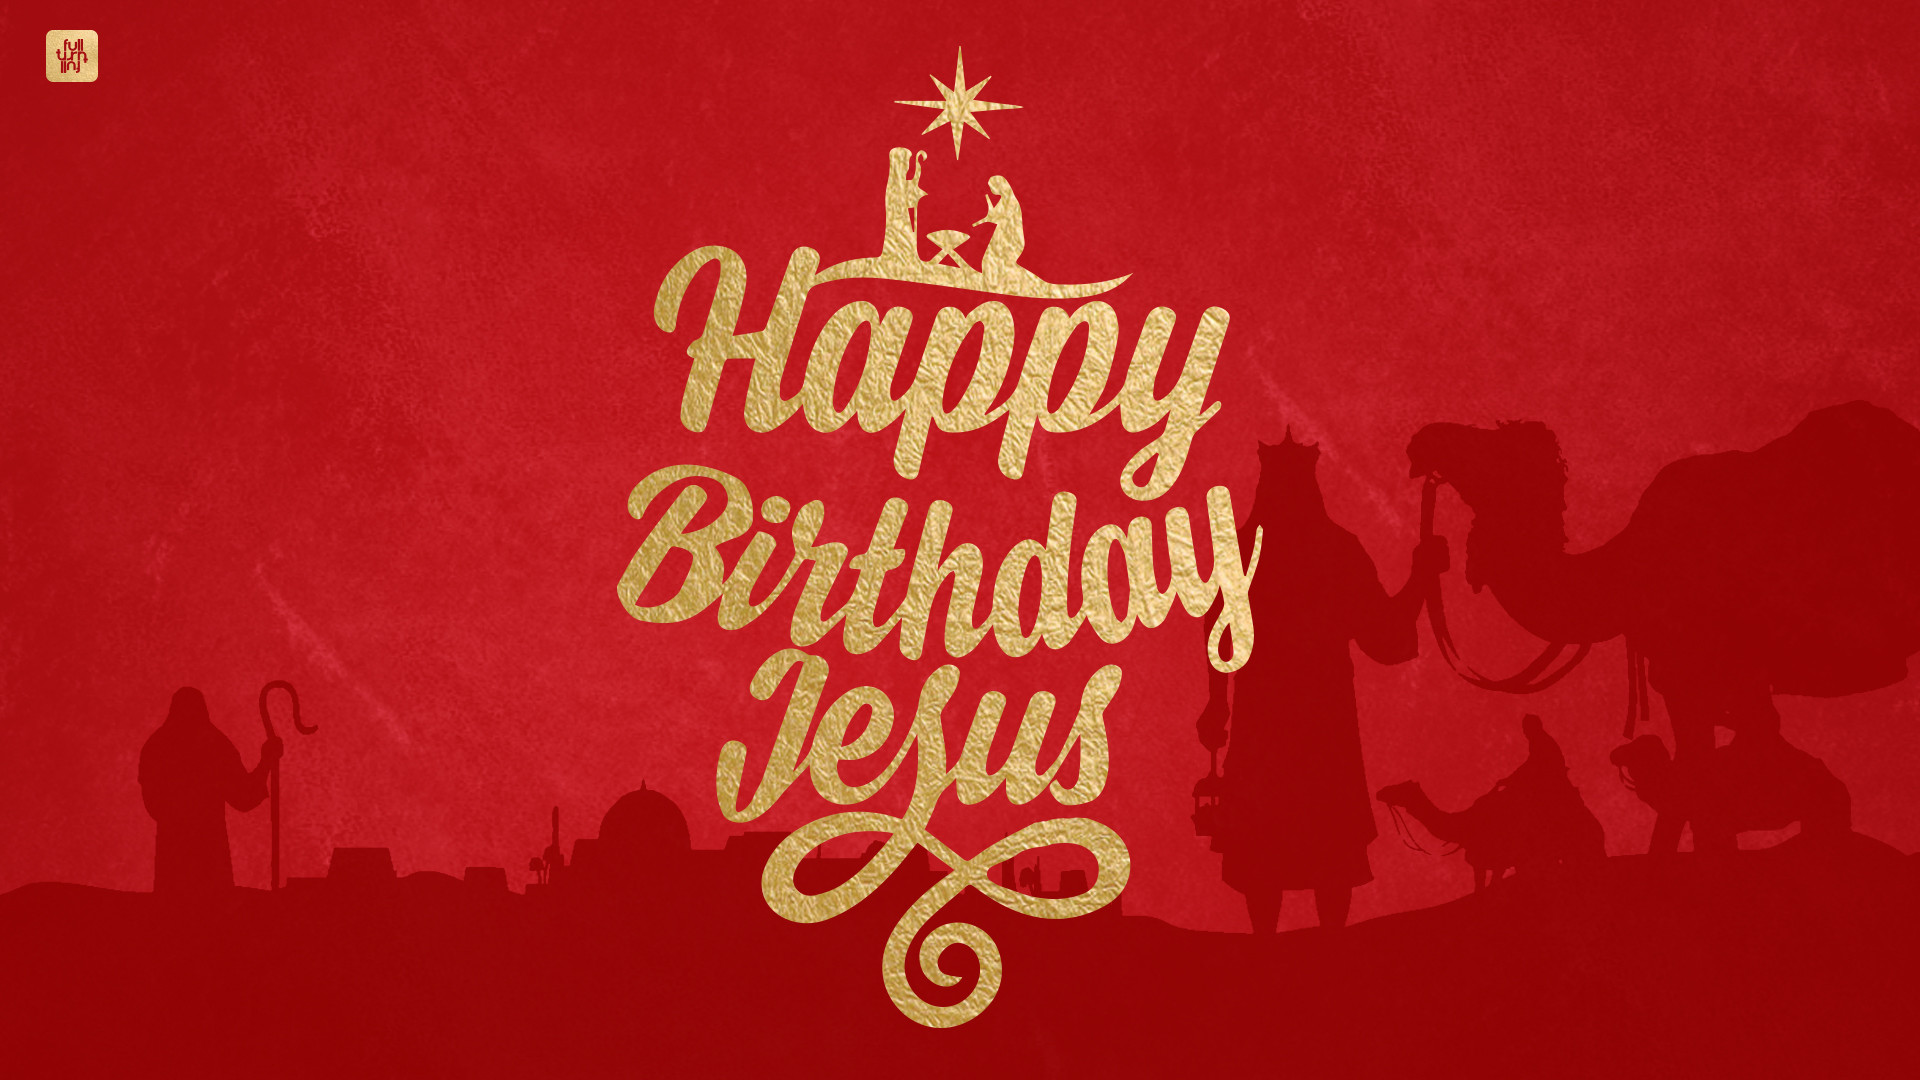 Birthday Party For Jesus Ideas
 Happy Birthday Jesus – Church Sermon Series Ideas